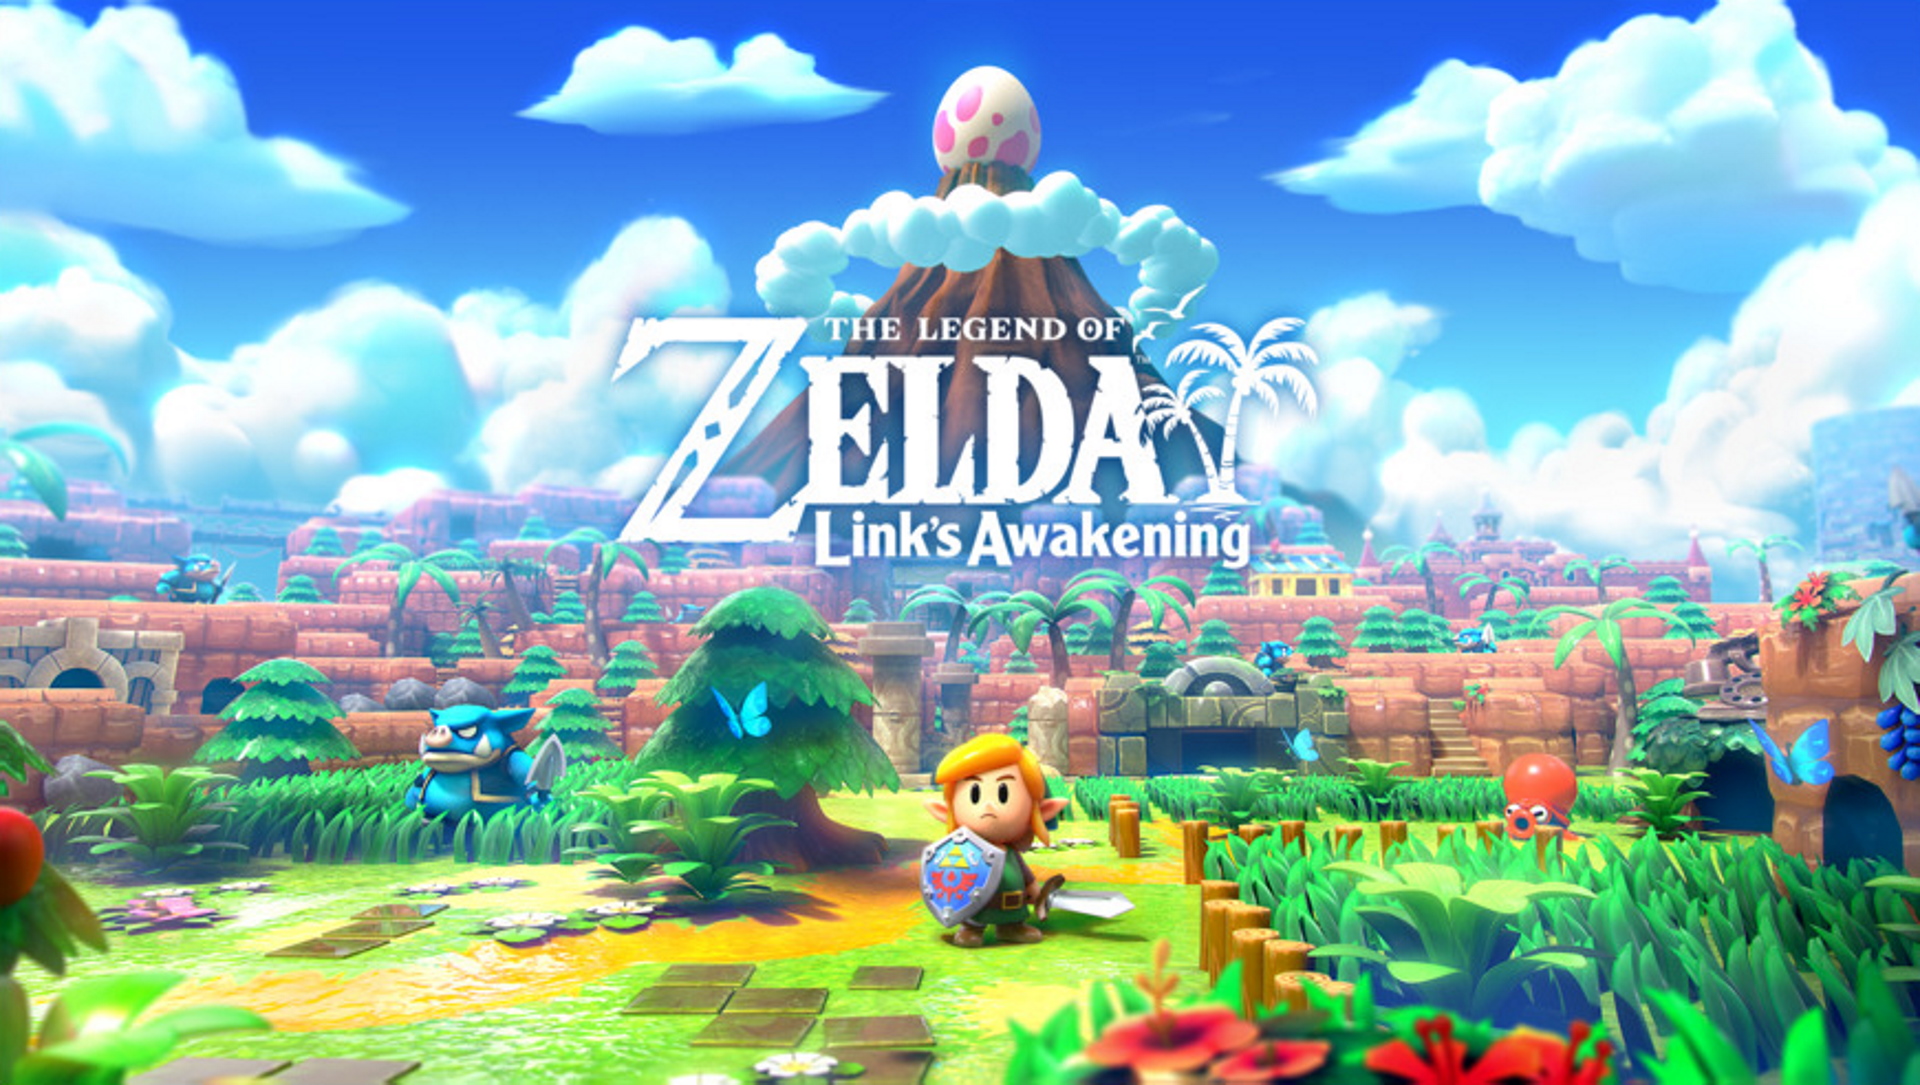 The Legend of Zelda: Link's Awakening Review - Re-awakening a legend